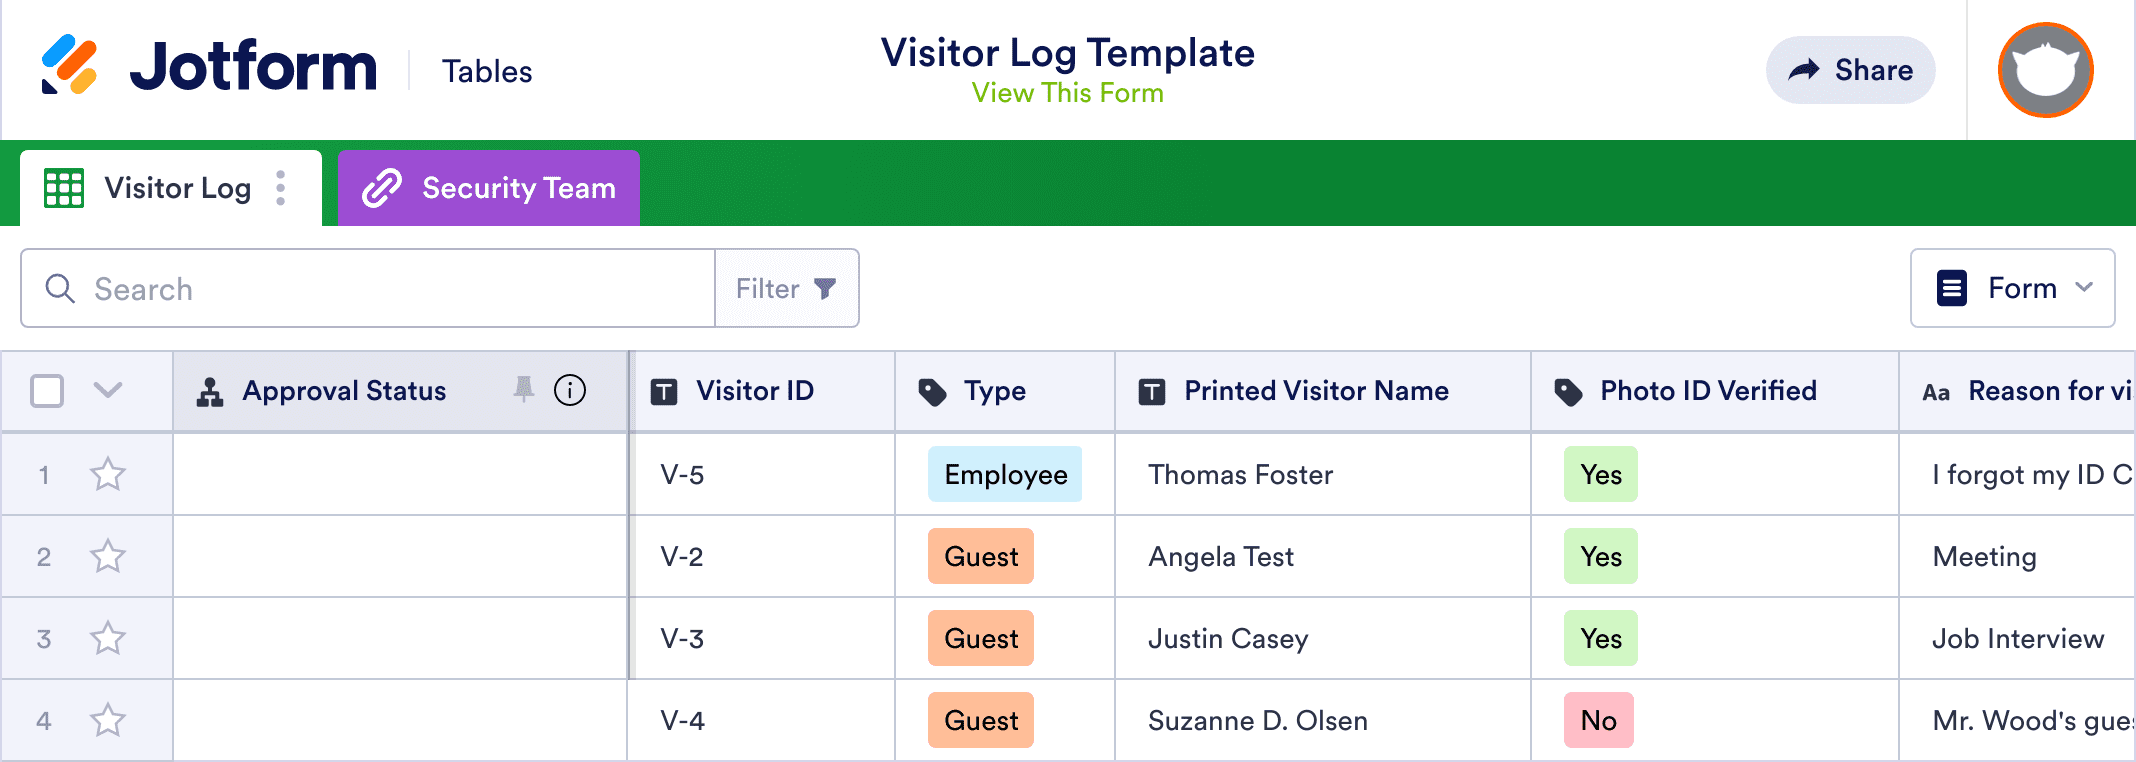 Visitor Log Template | Jotform Tables